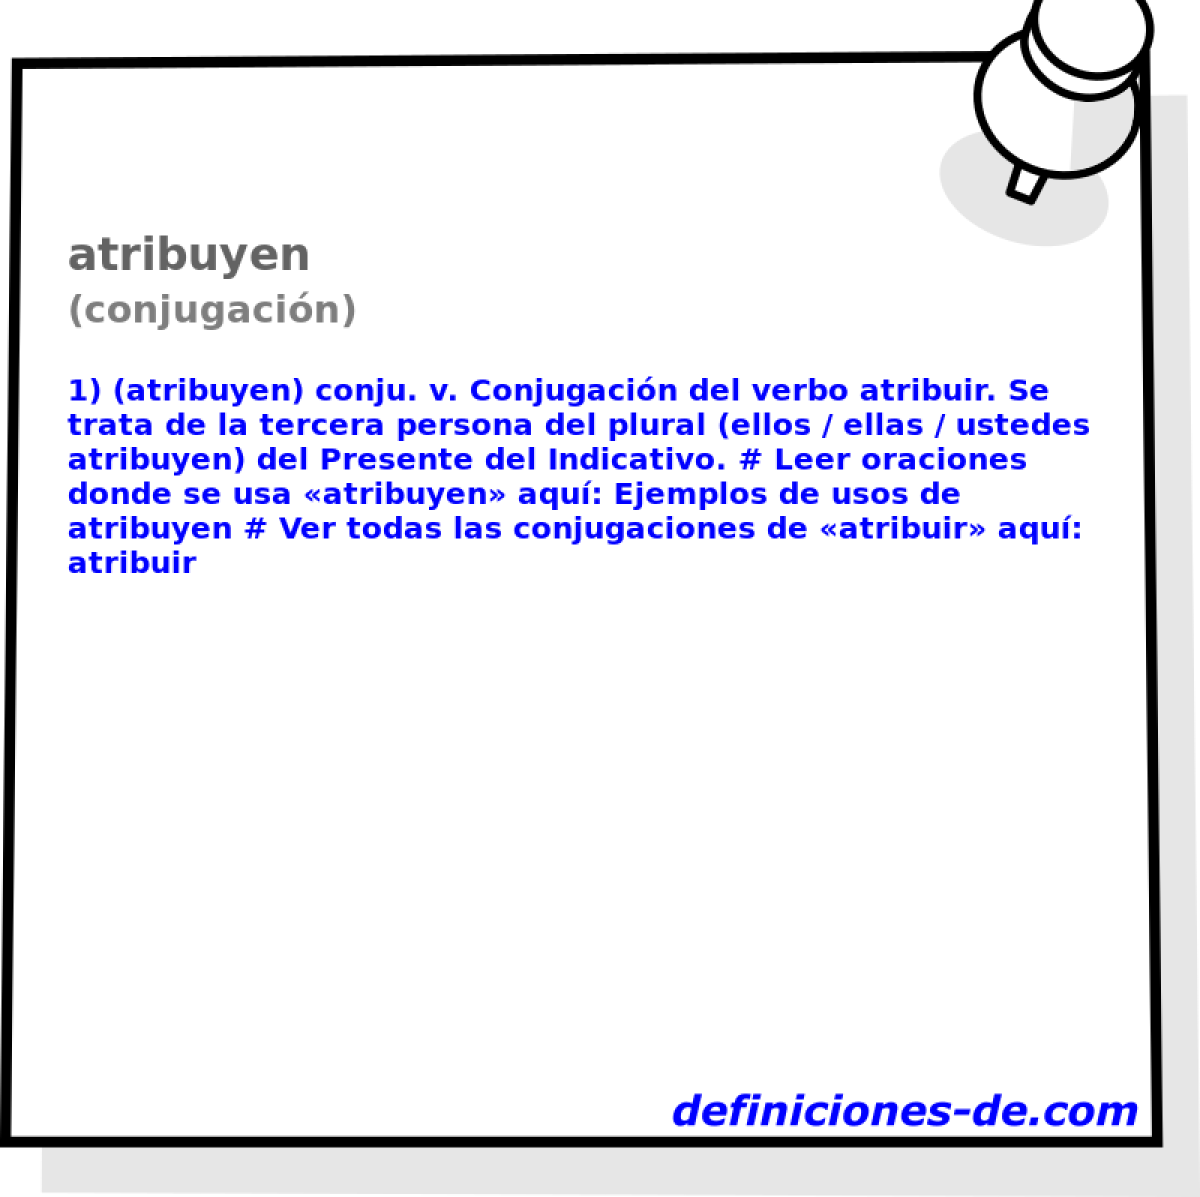 atribuyen (conjugacin)